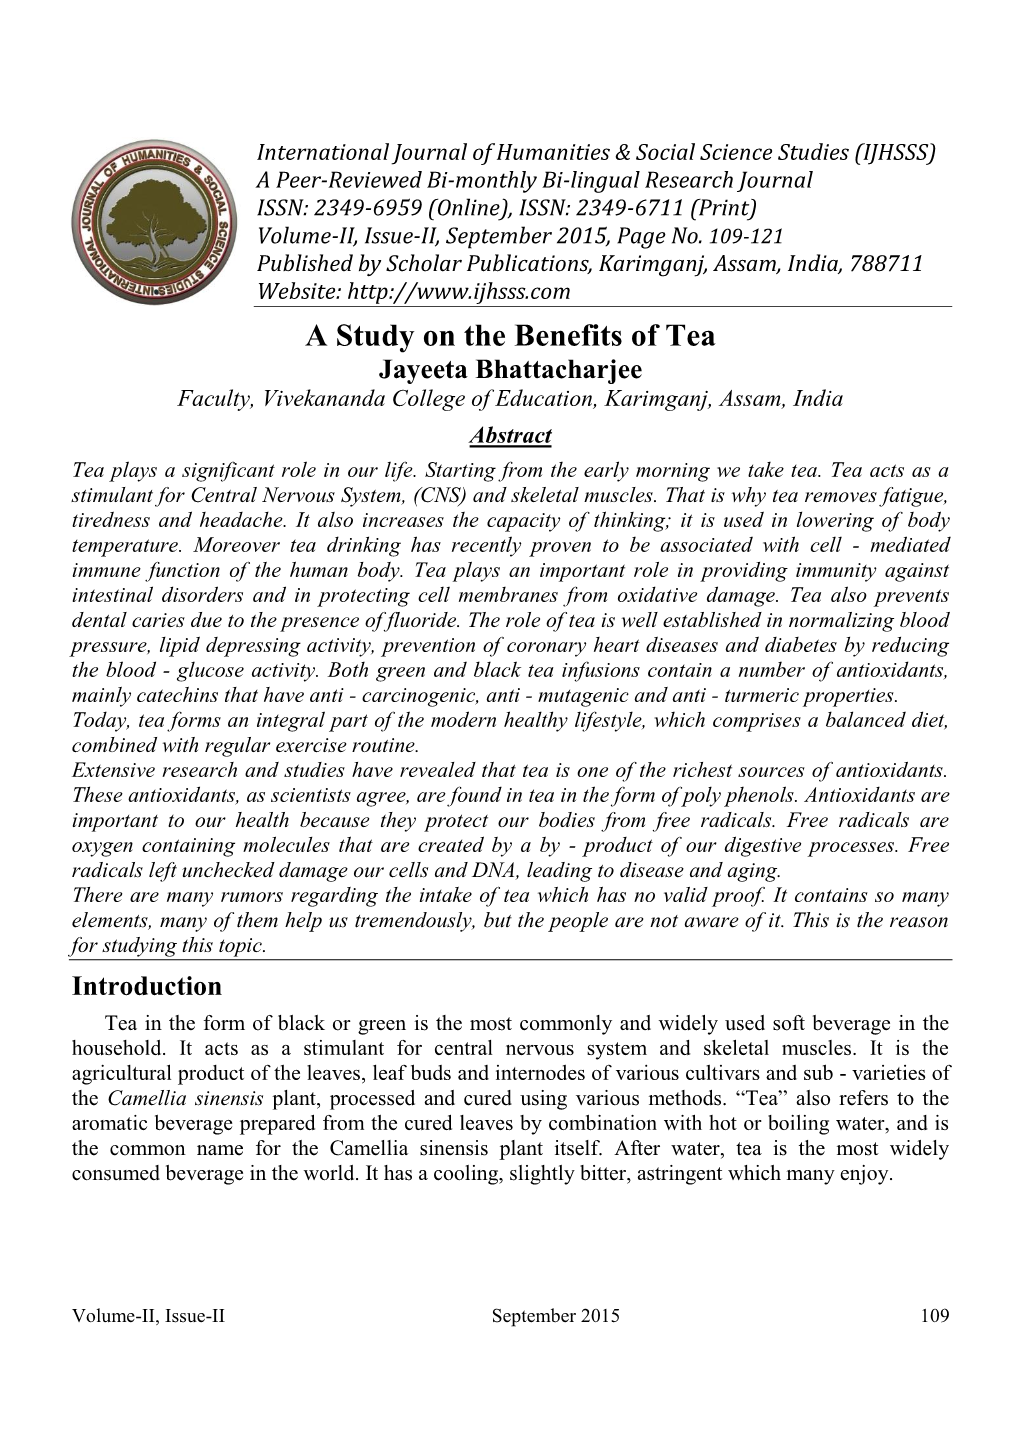 A Study on the Benefits of Tea Jayeeta Bhattacharjee Faculty, Vivekananda College of Education, Karimganj, Assam, India